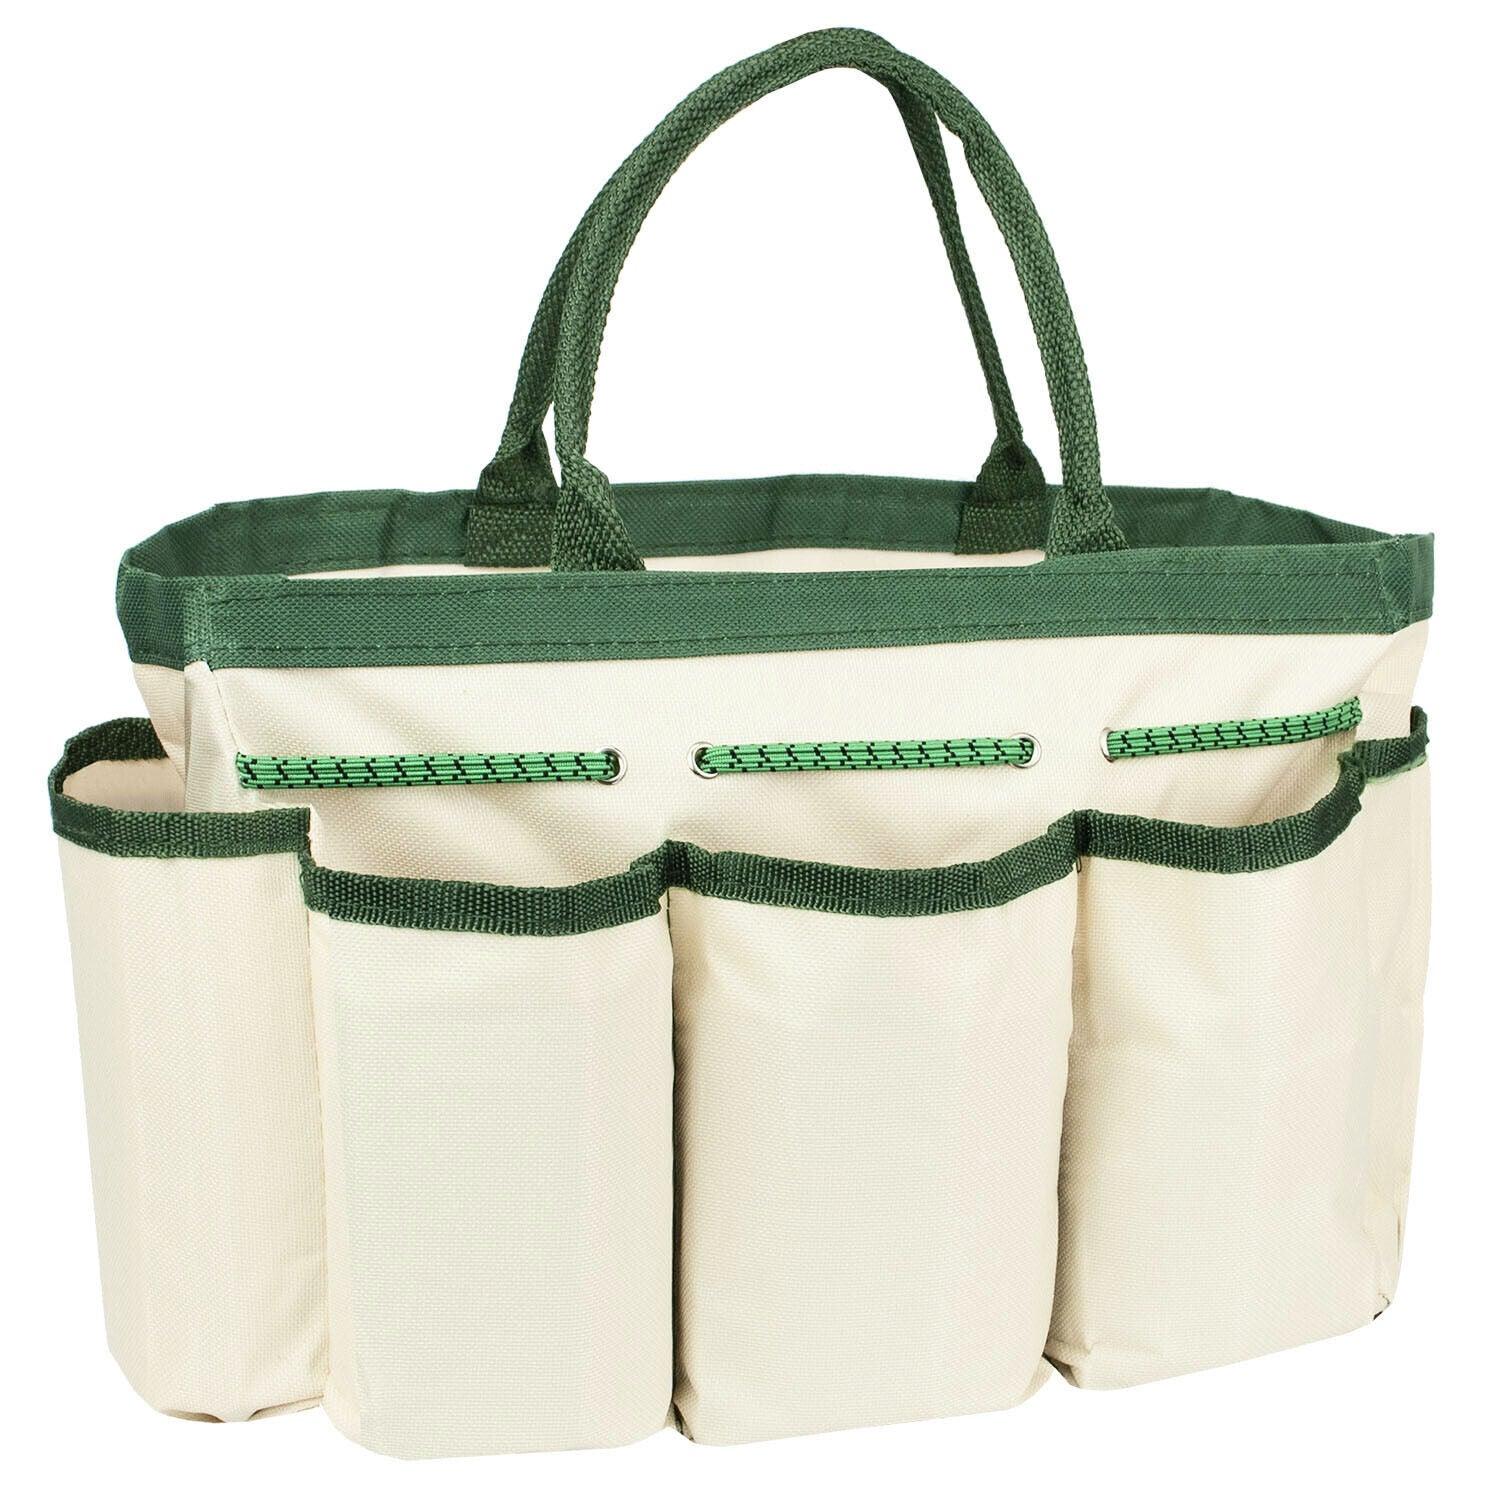 11-Piece Garden Tools Set: Gardening Kit with Bag and Knee Pad - Click